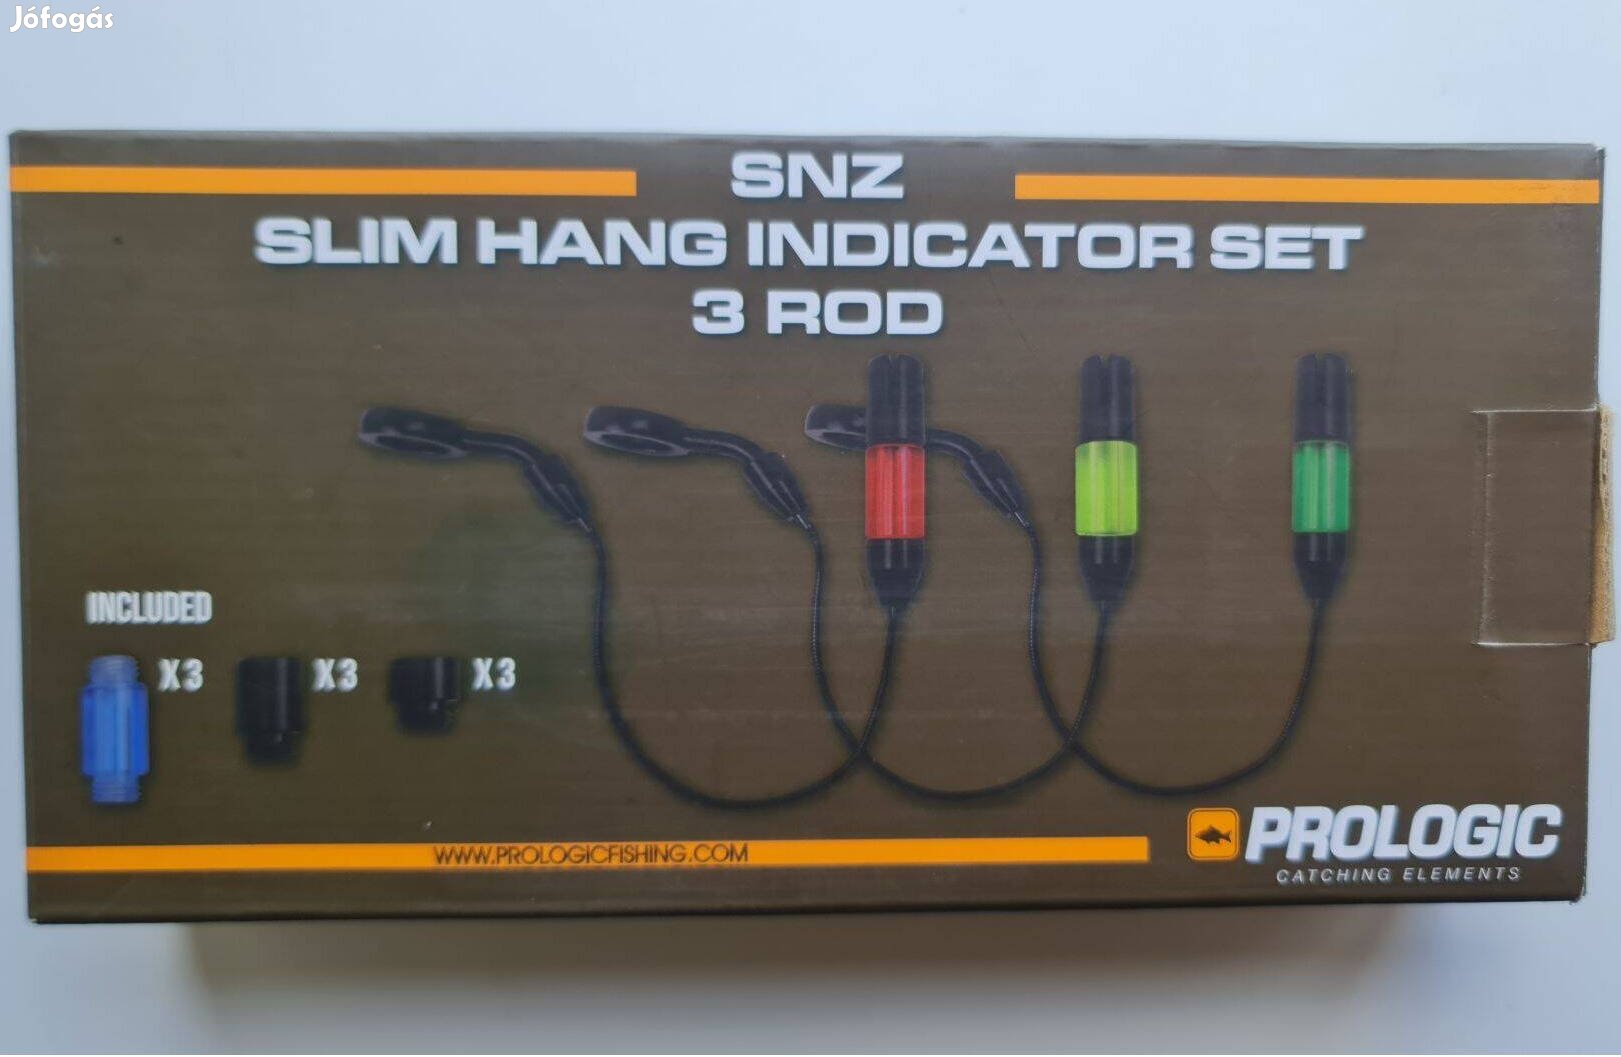 Prologic Snz slim hang indicator set, swinger, kapásjelző